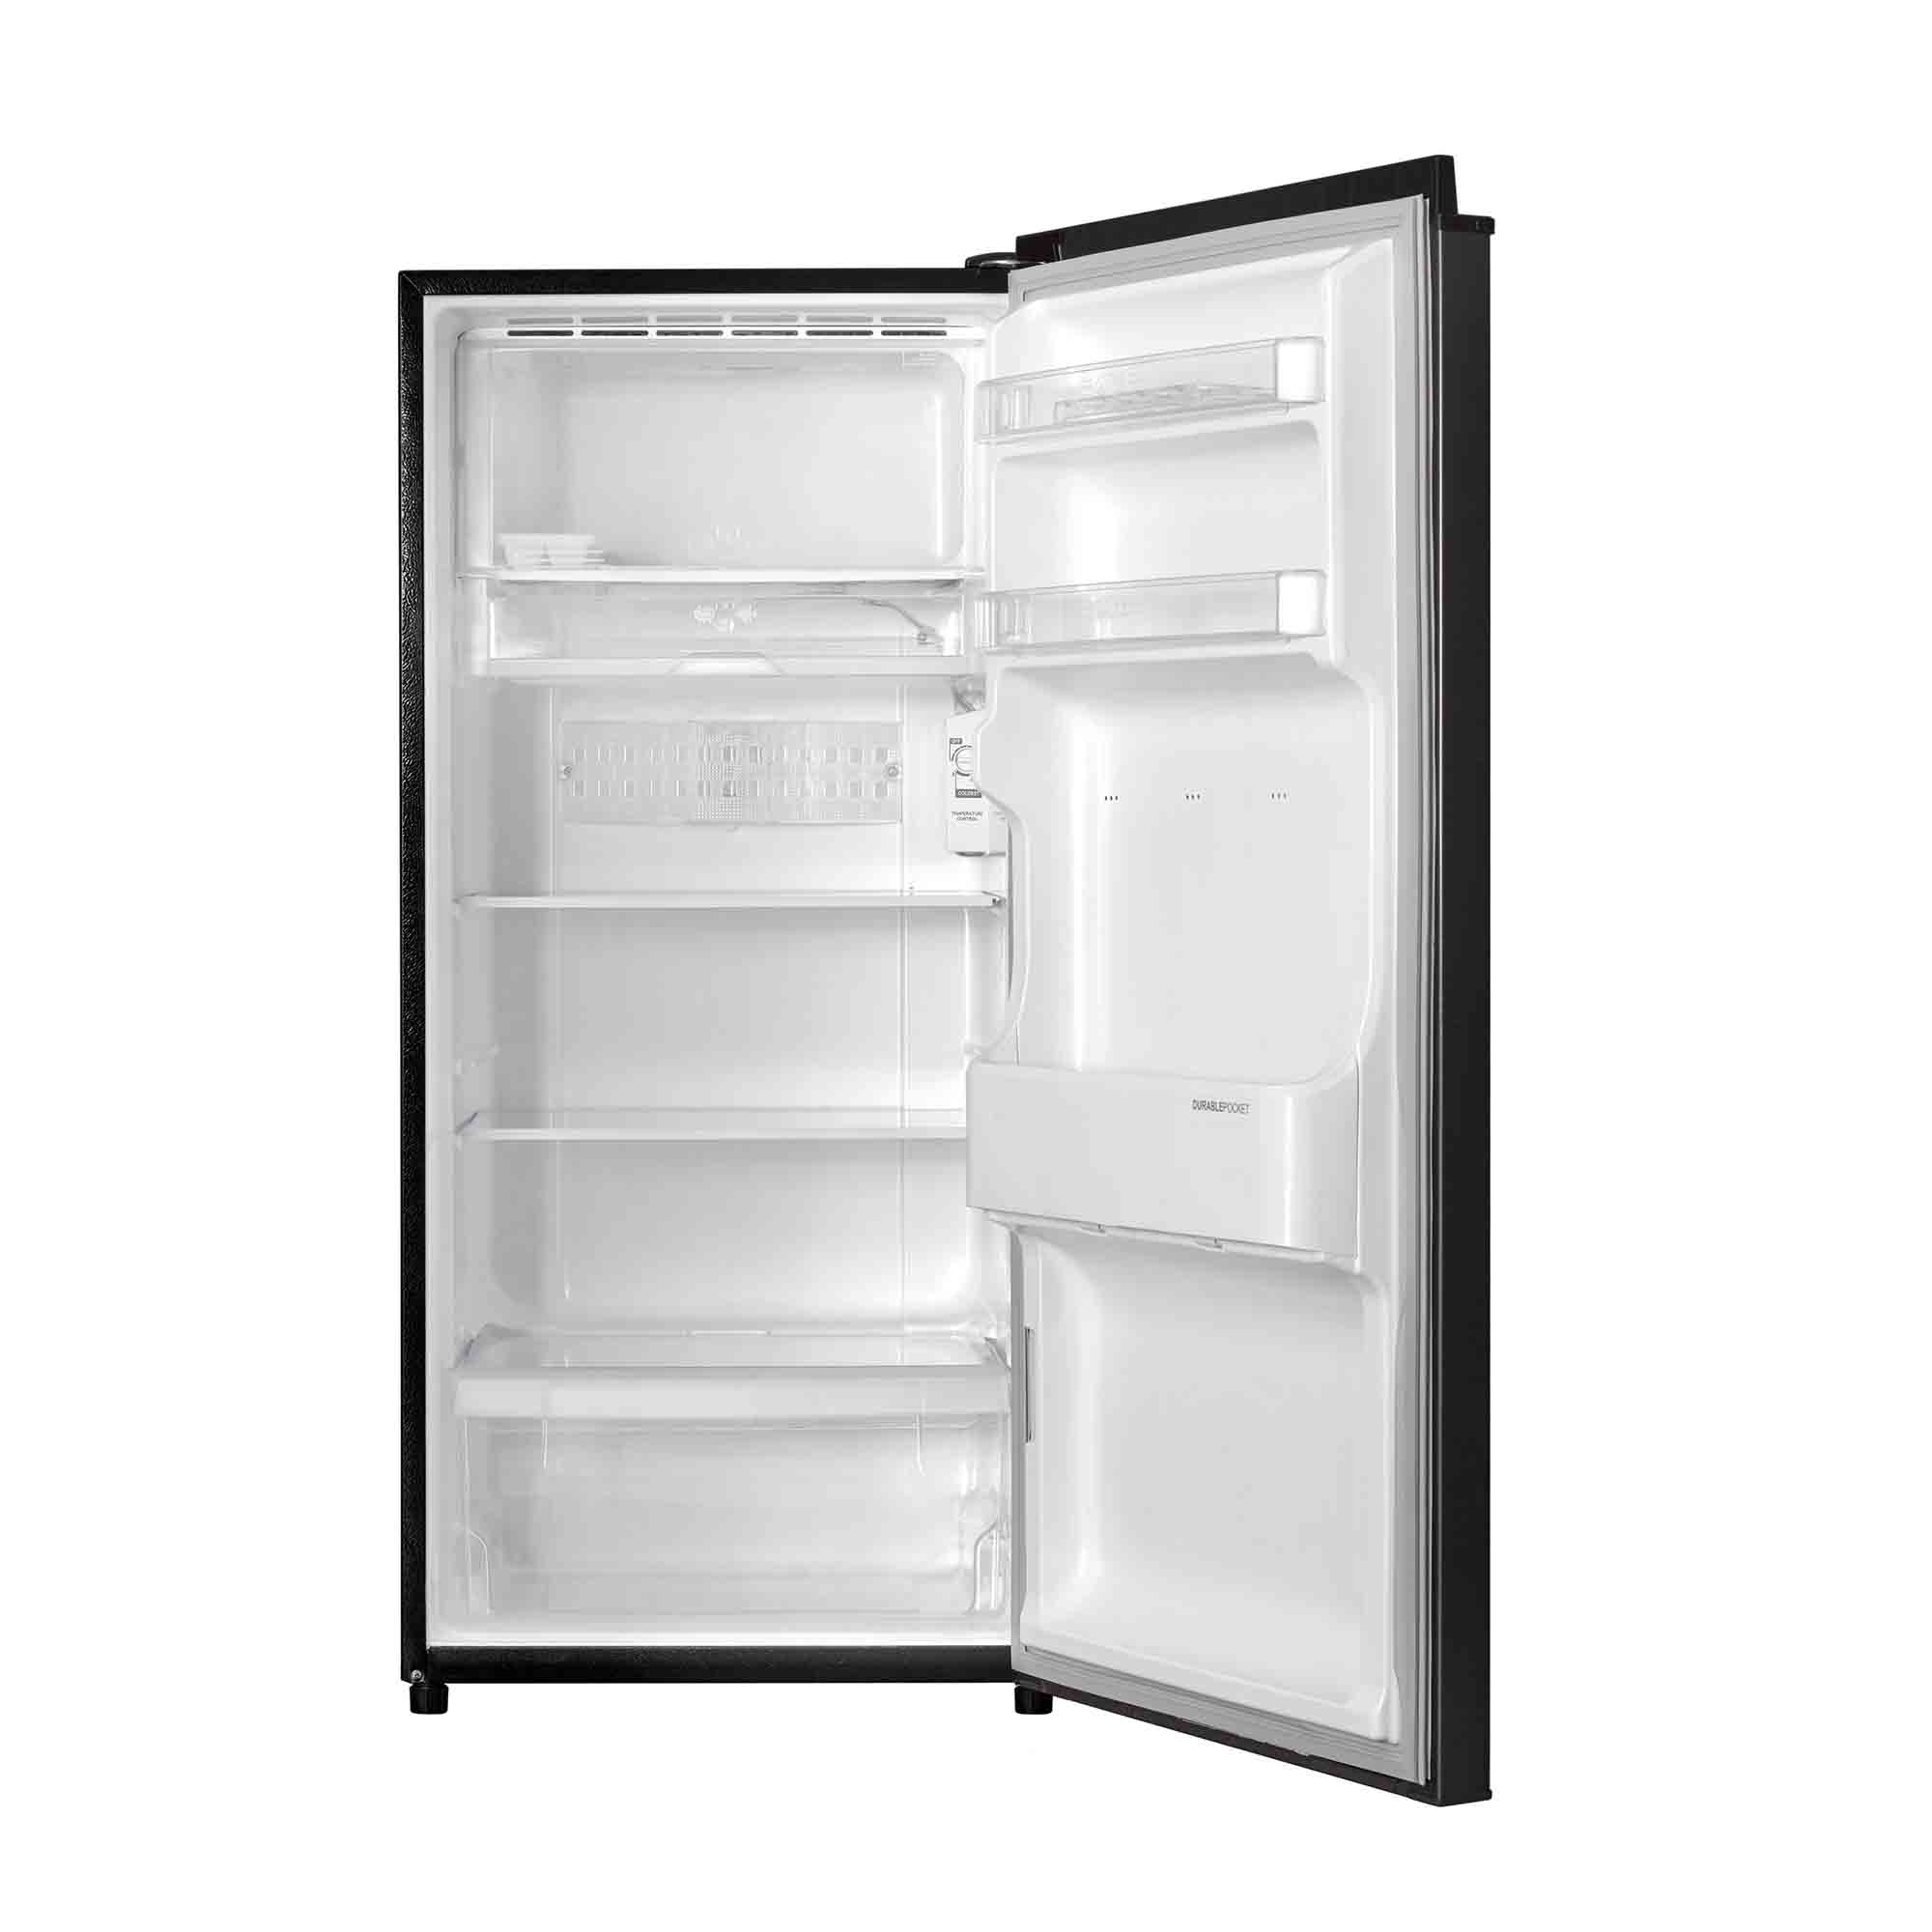 14 Best Single Door Refrigerator Reviews (July 2020)